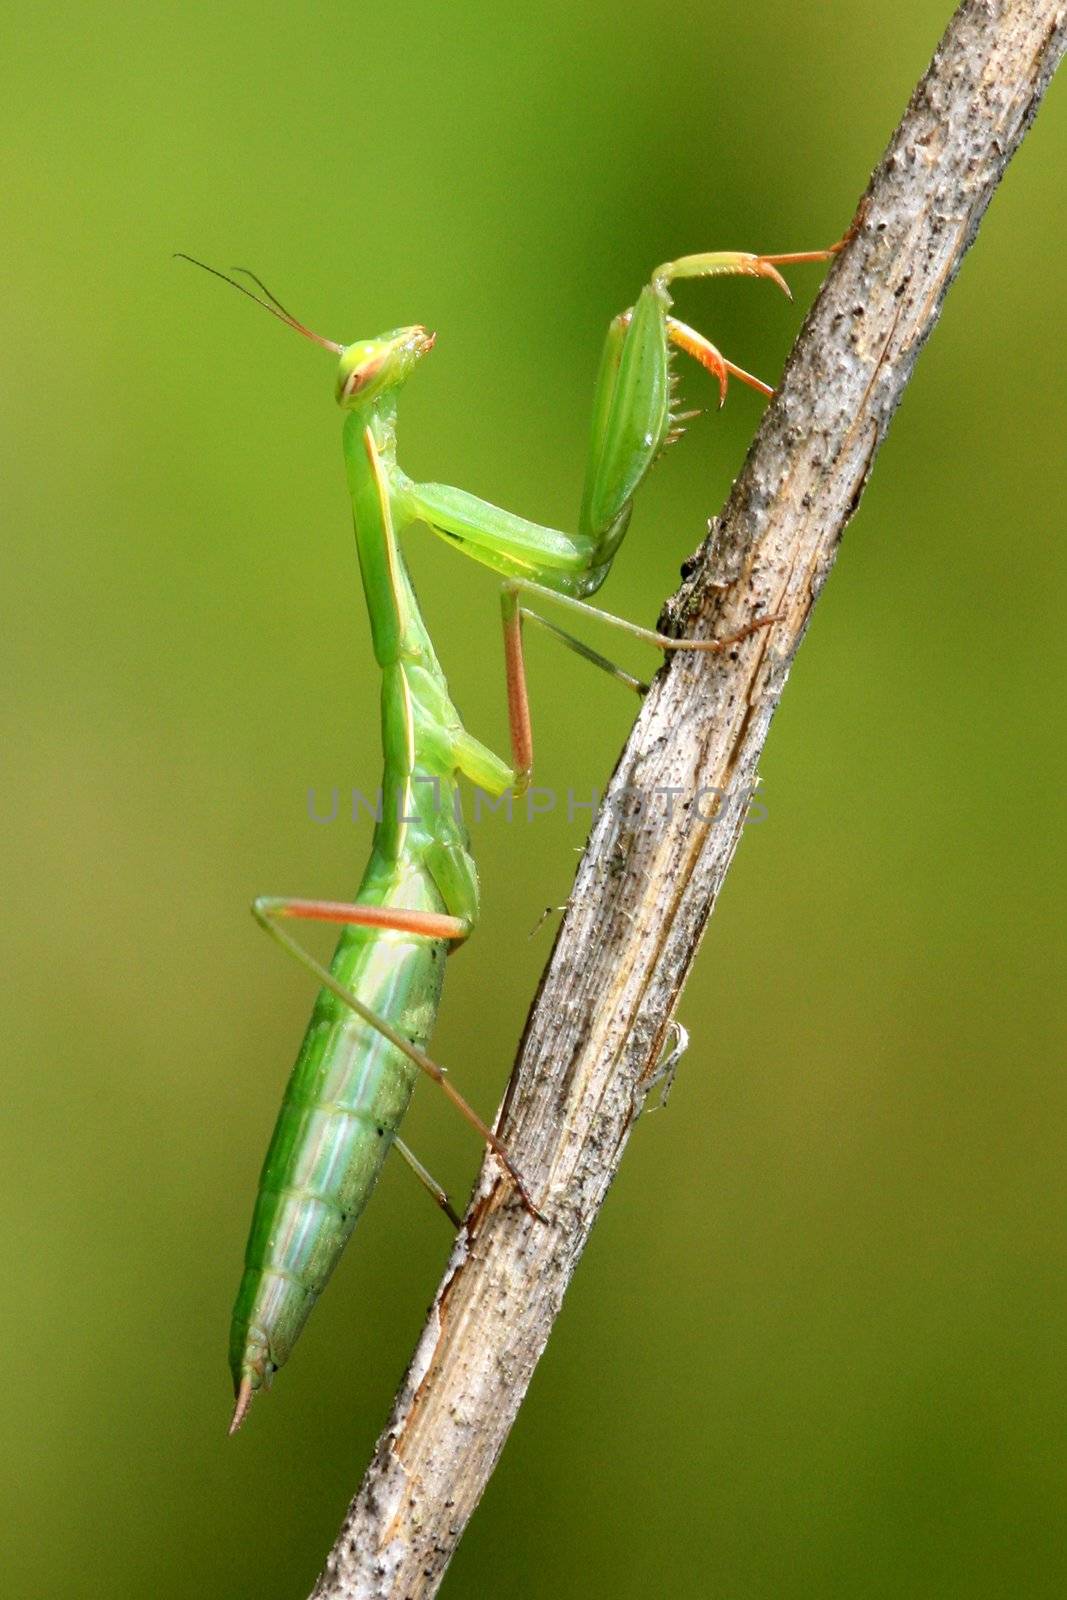 Juvenile Mantis religiosa, praying mantis on a stick

